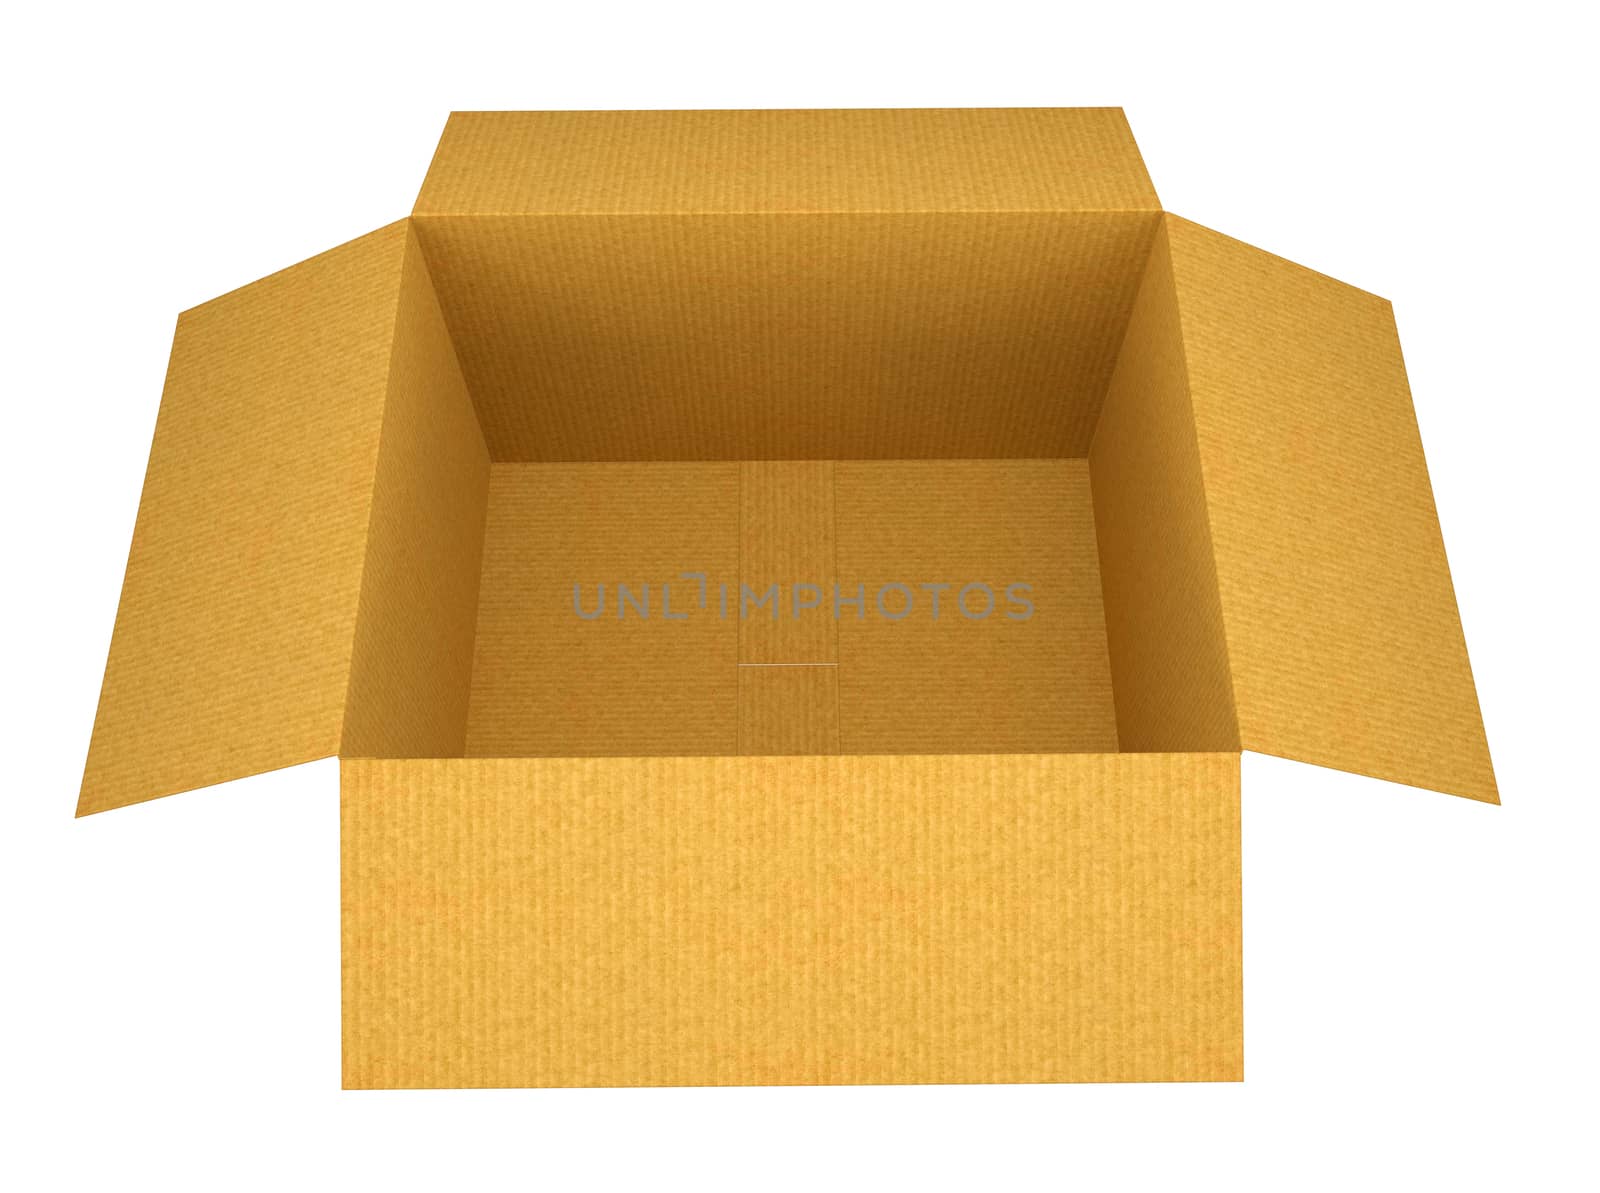 Open Cardboard Box by cherezoff